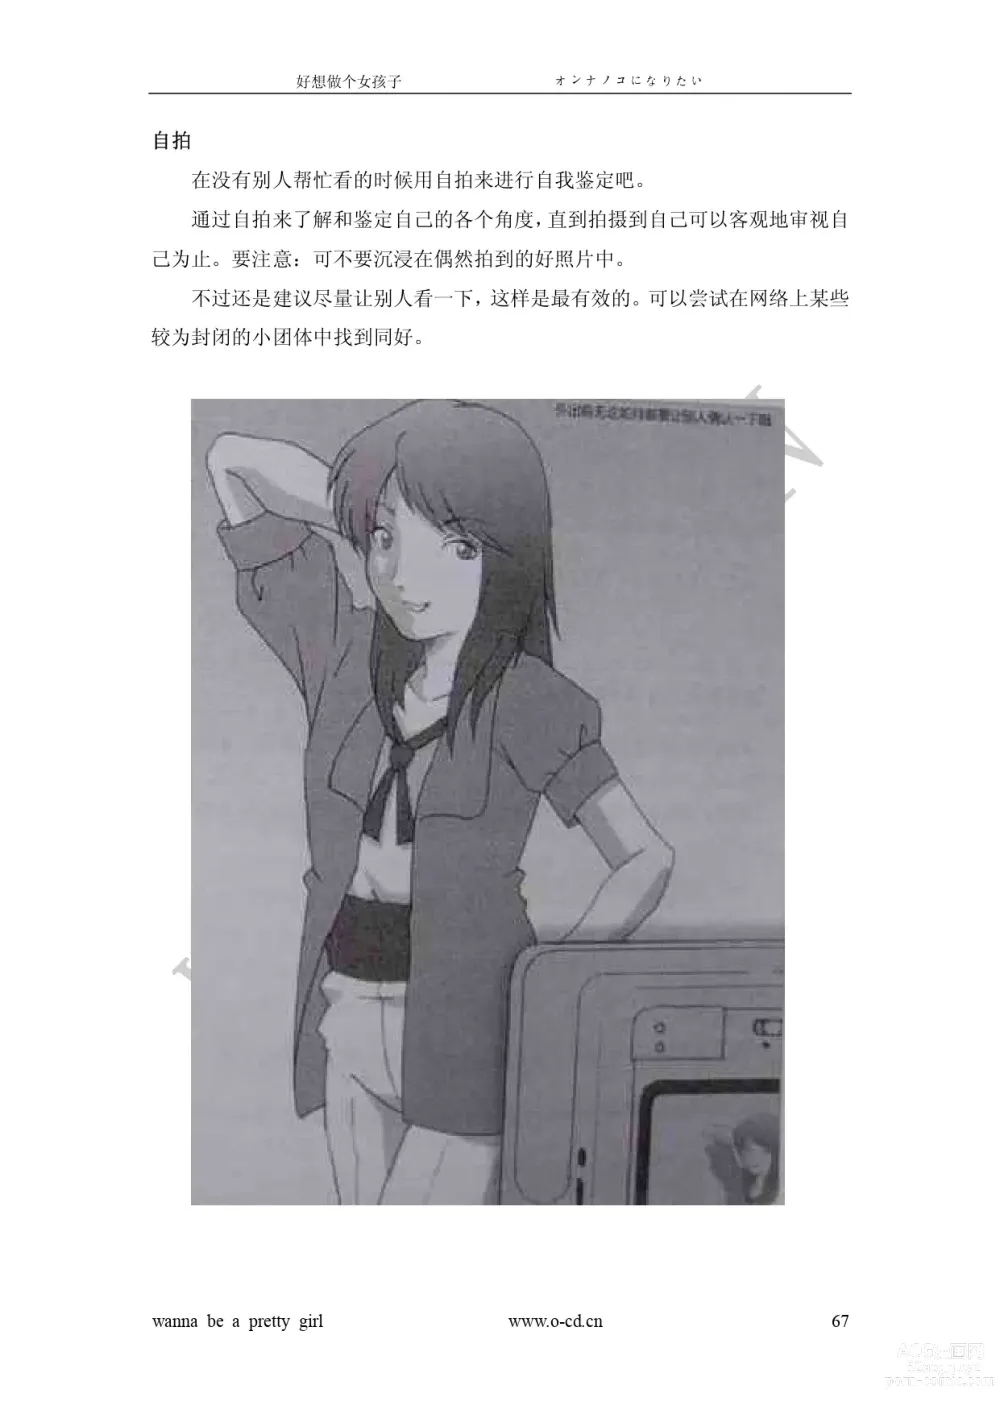 Page 72 of doujinshi 好想做個女孩子!